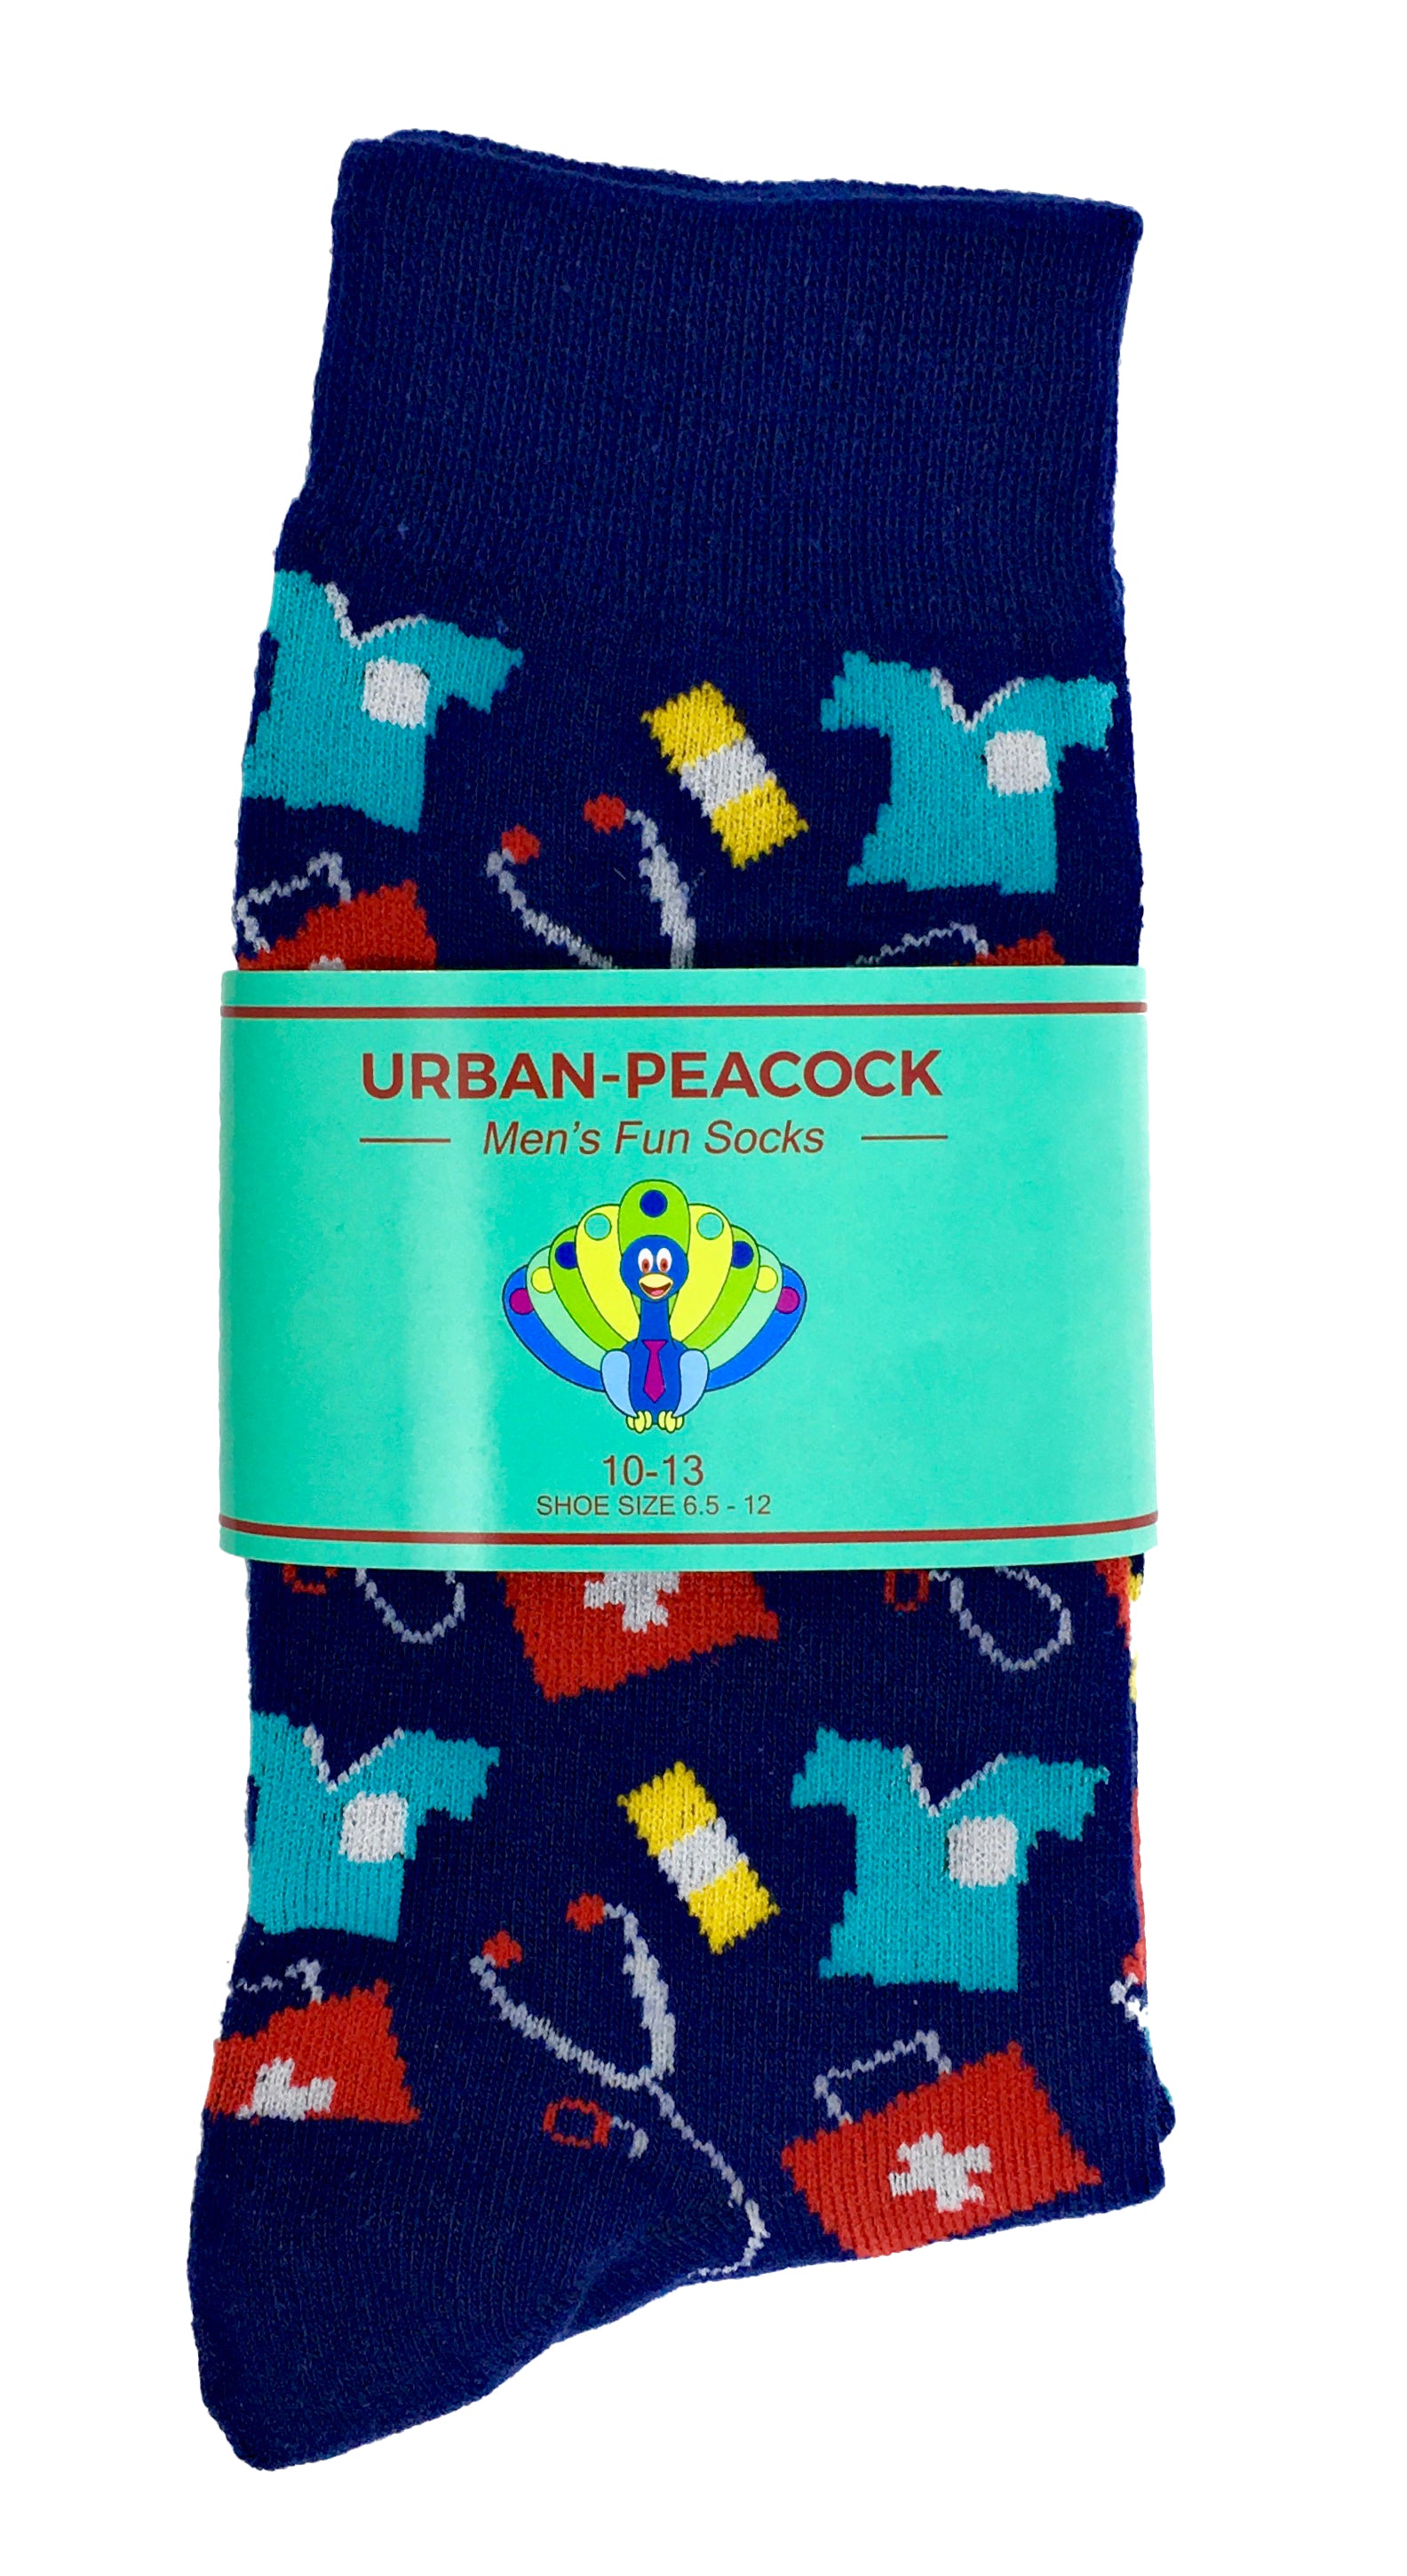 Urban-Peacock Men's Novelty Crew Socks - Doctor / Nurse - Navy